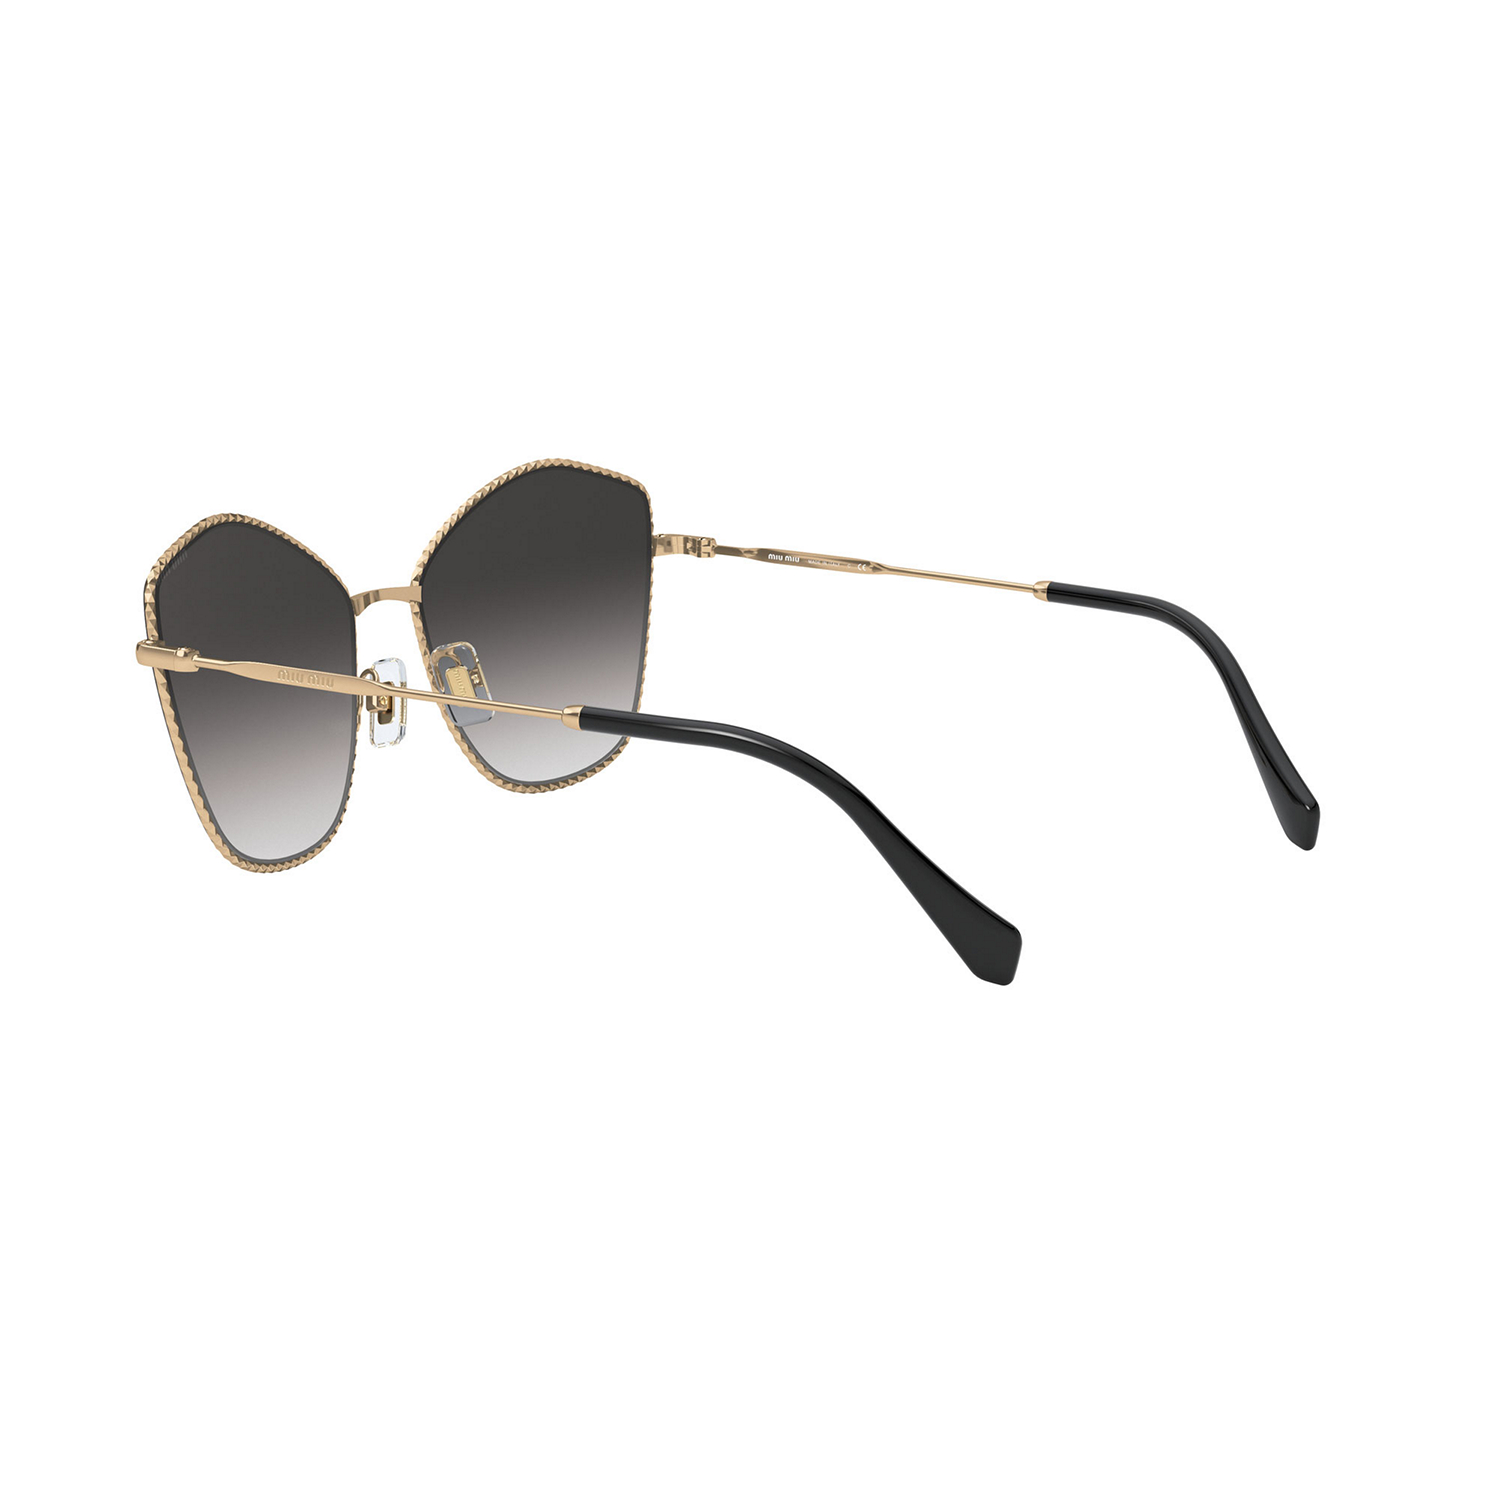 MU 60VS Cat Sunglasses